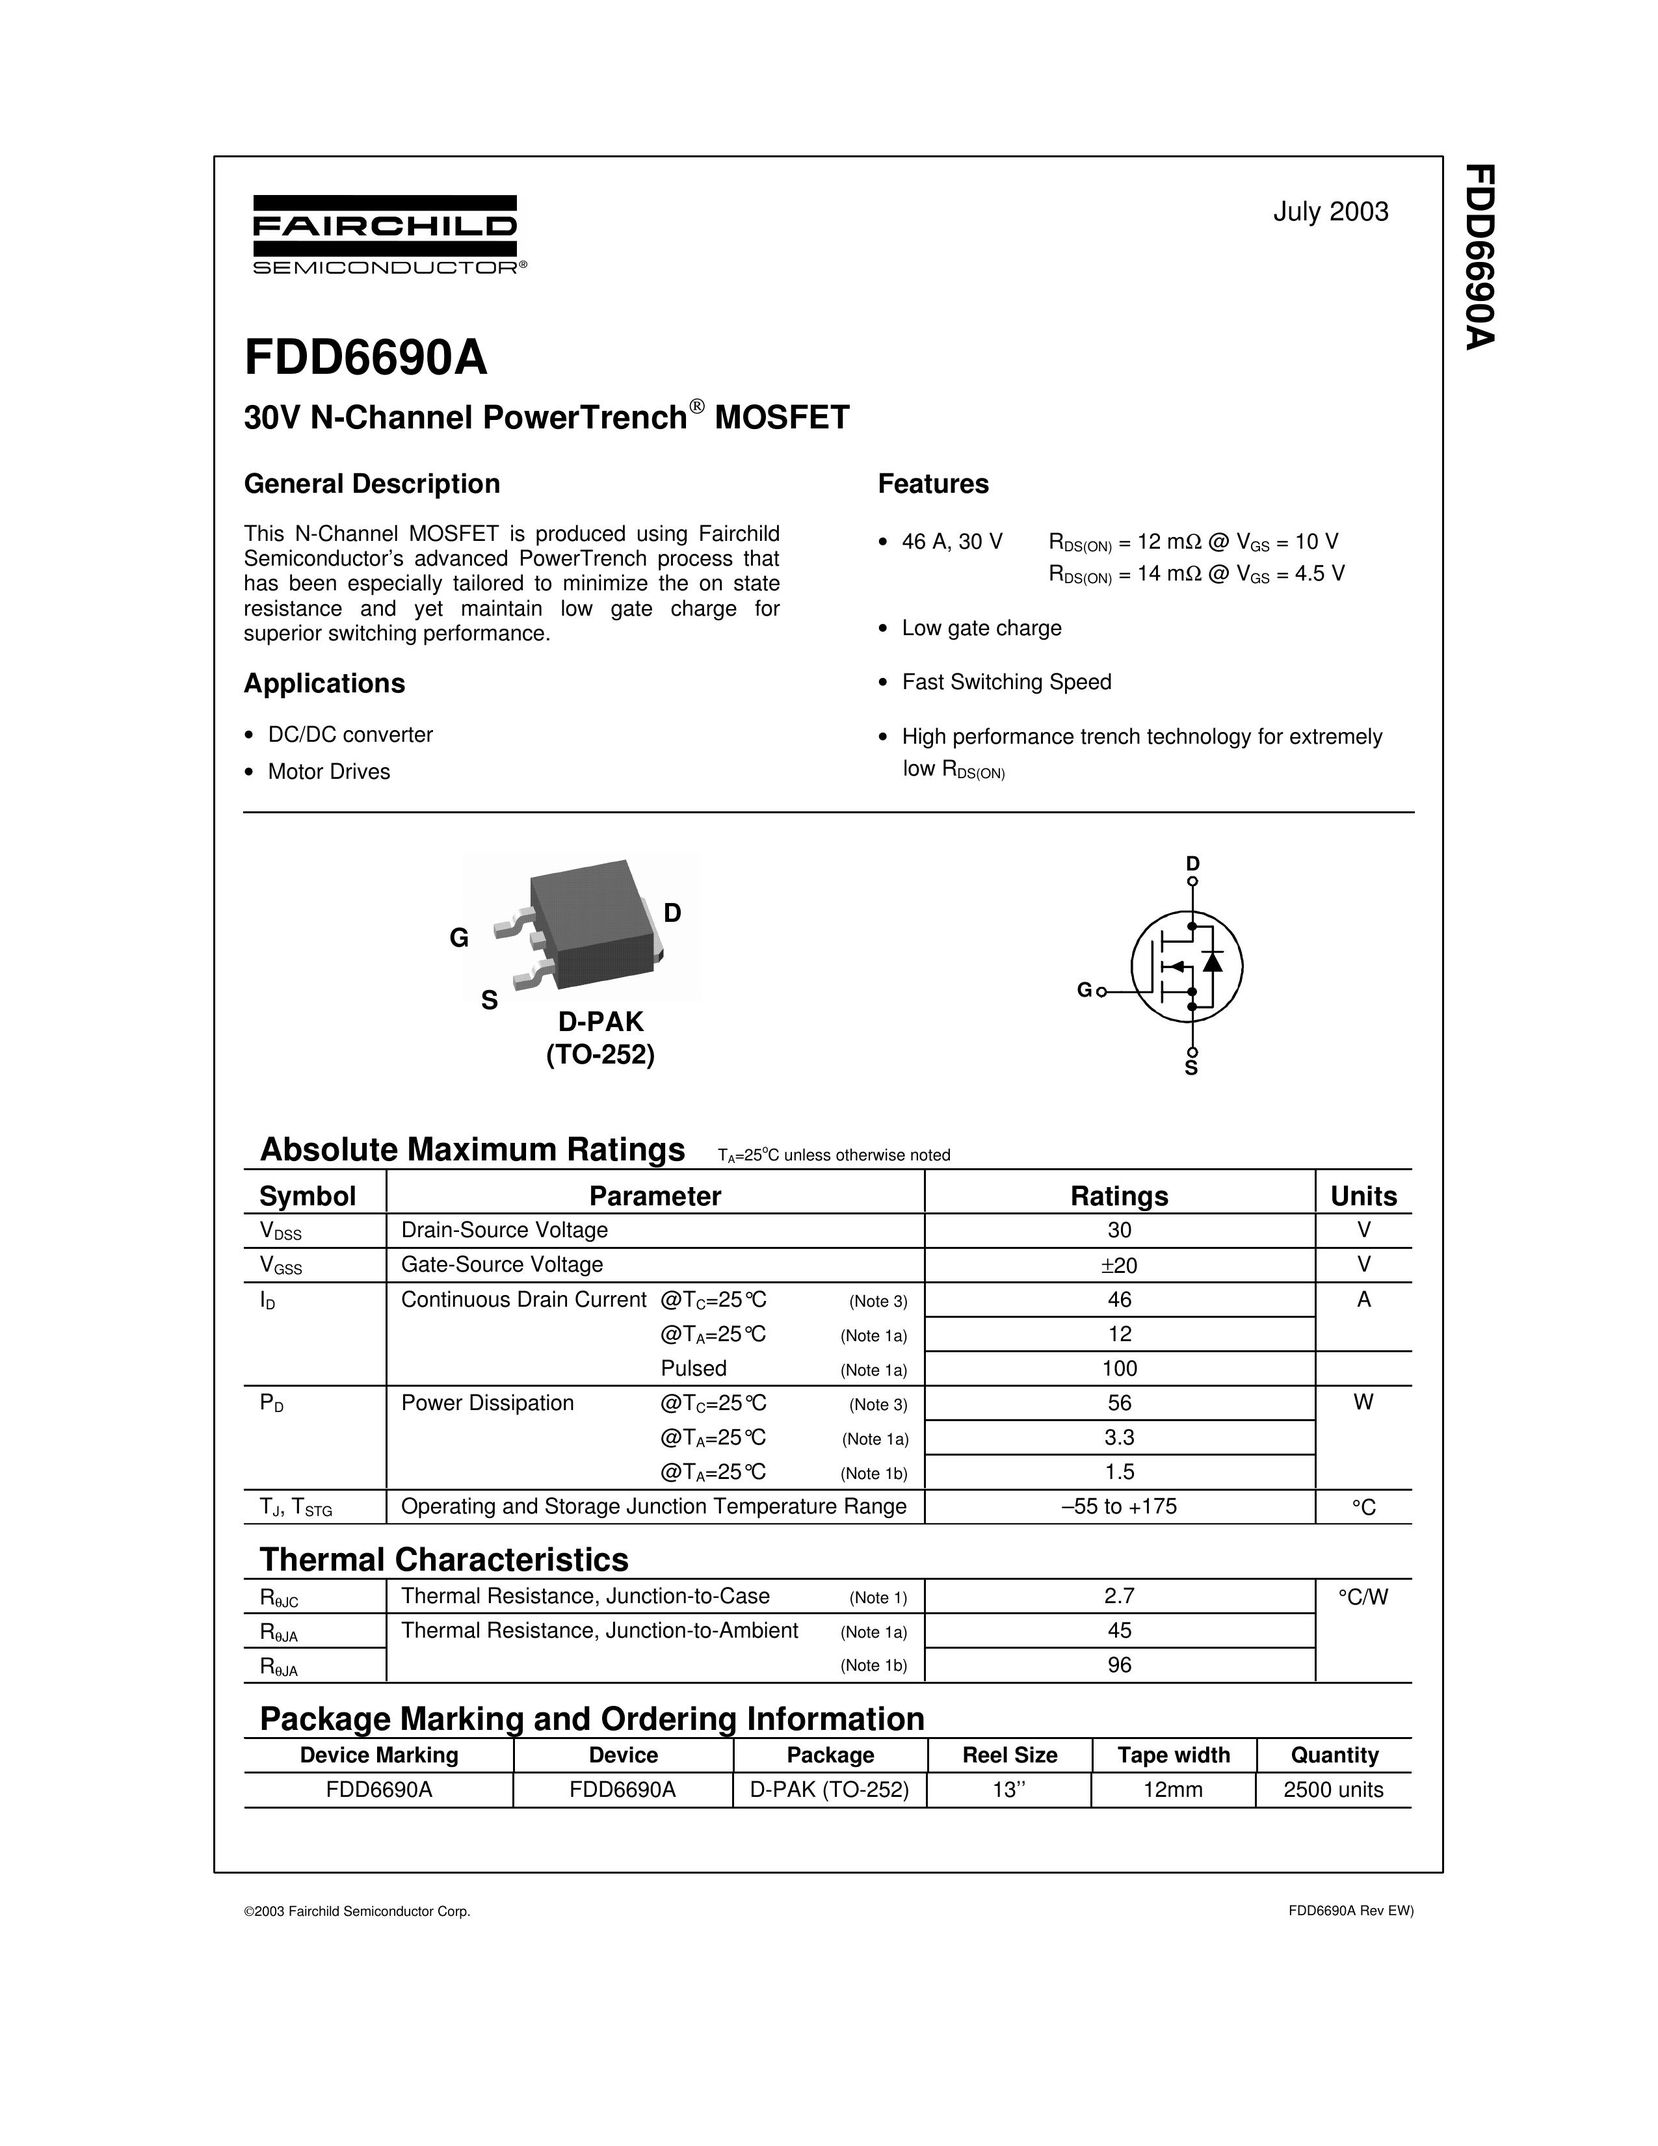 Fairchild FDD6690A Network Card User Manual